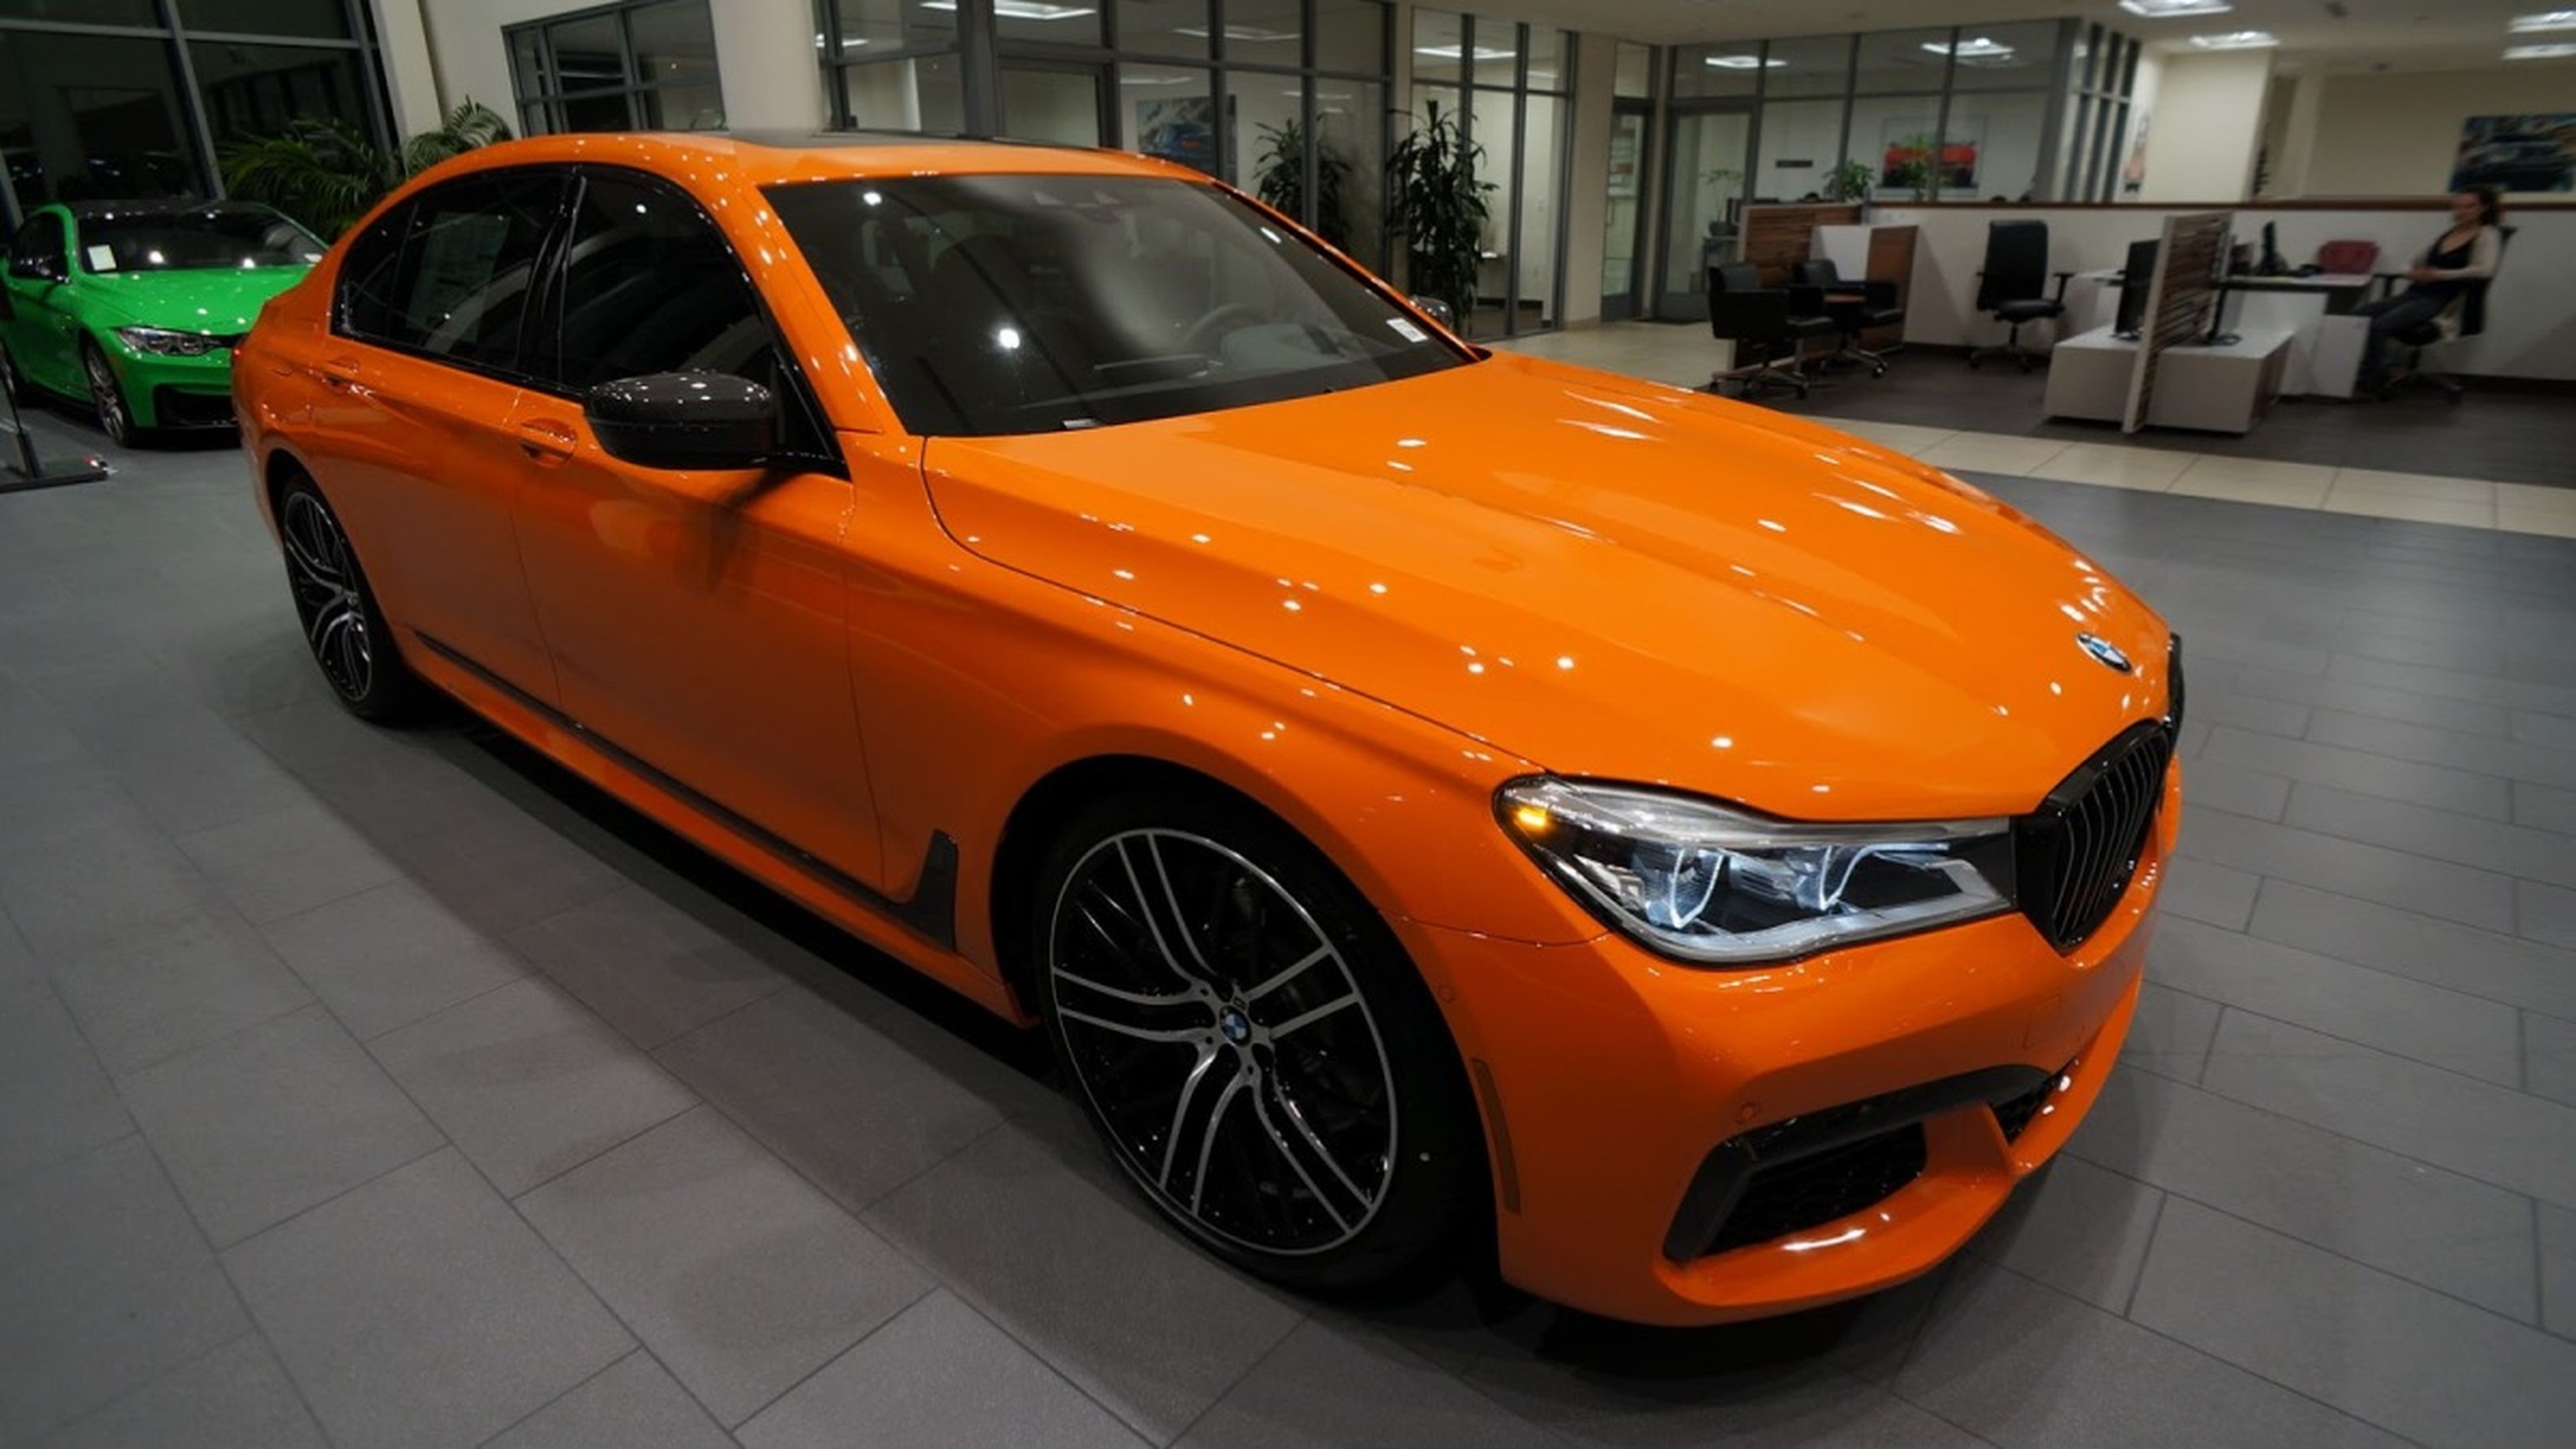 BMW 750i Fire Orange Individual